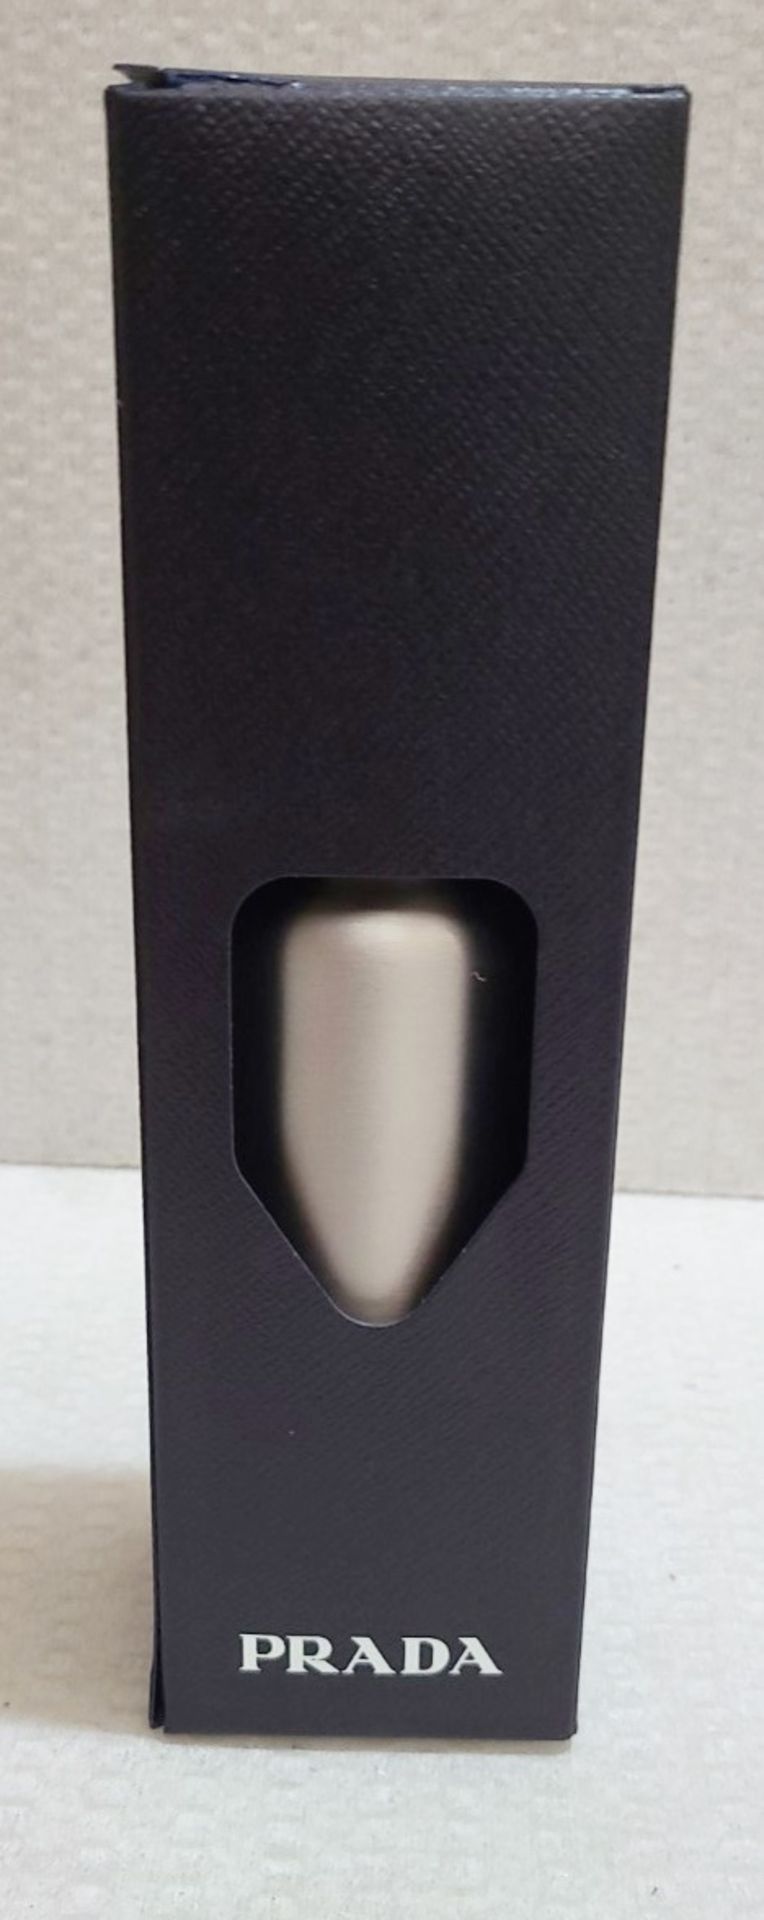 1 x PRADA Stainless Steel Insulated Water Bottle (500ml) - Original Price £100.00 - Image 5 of 6